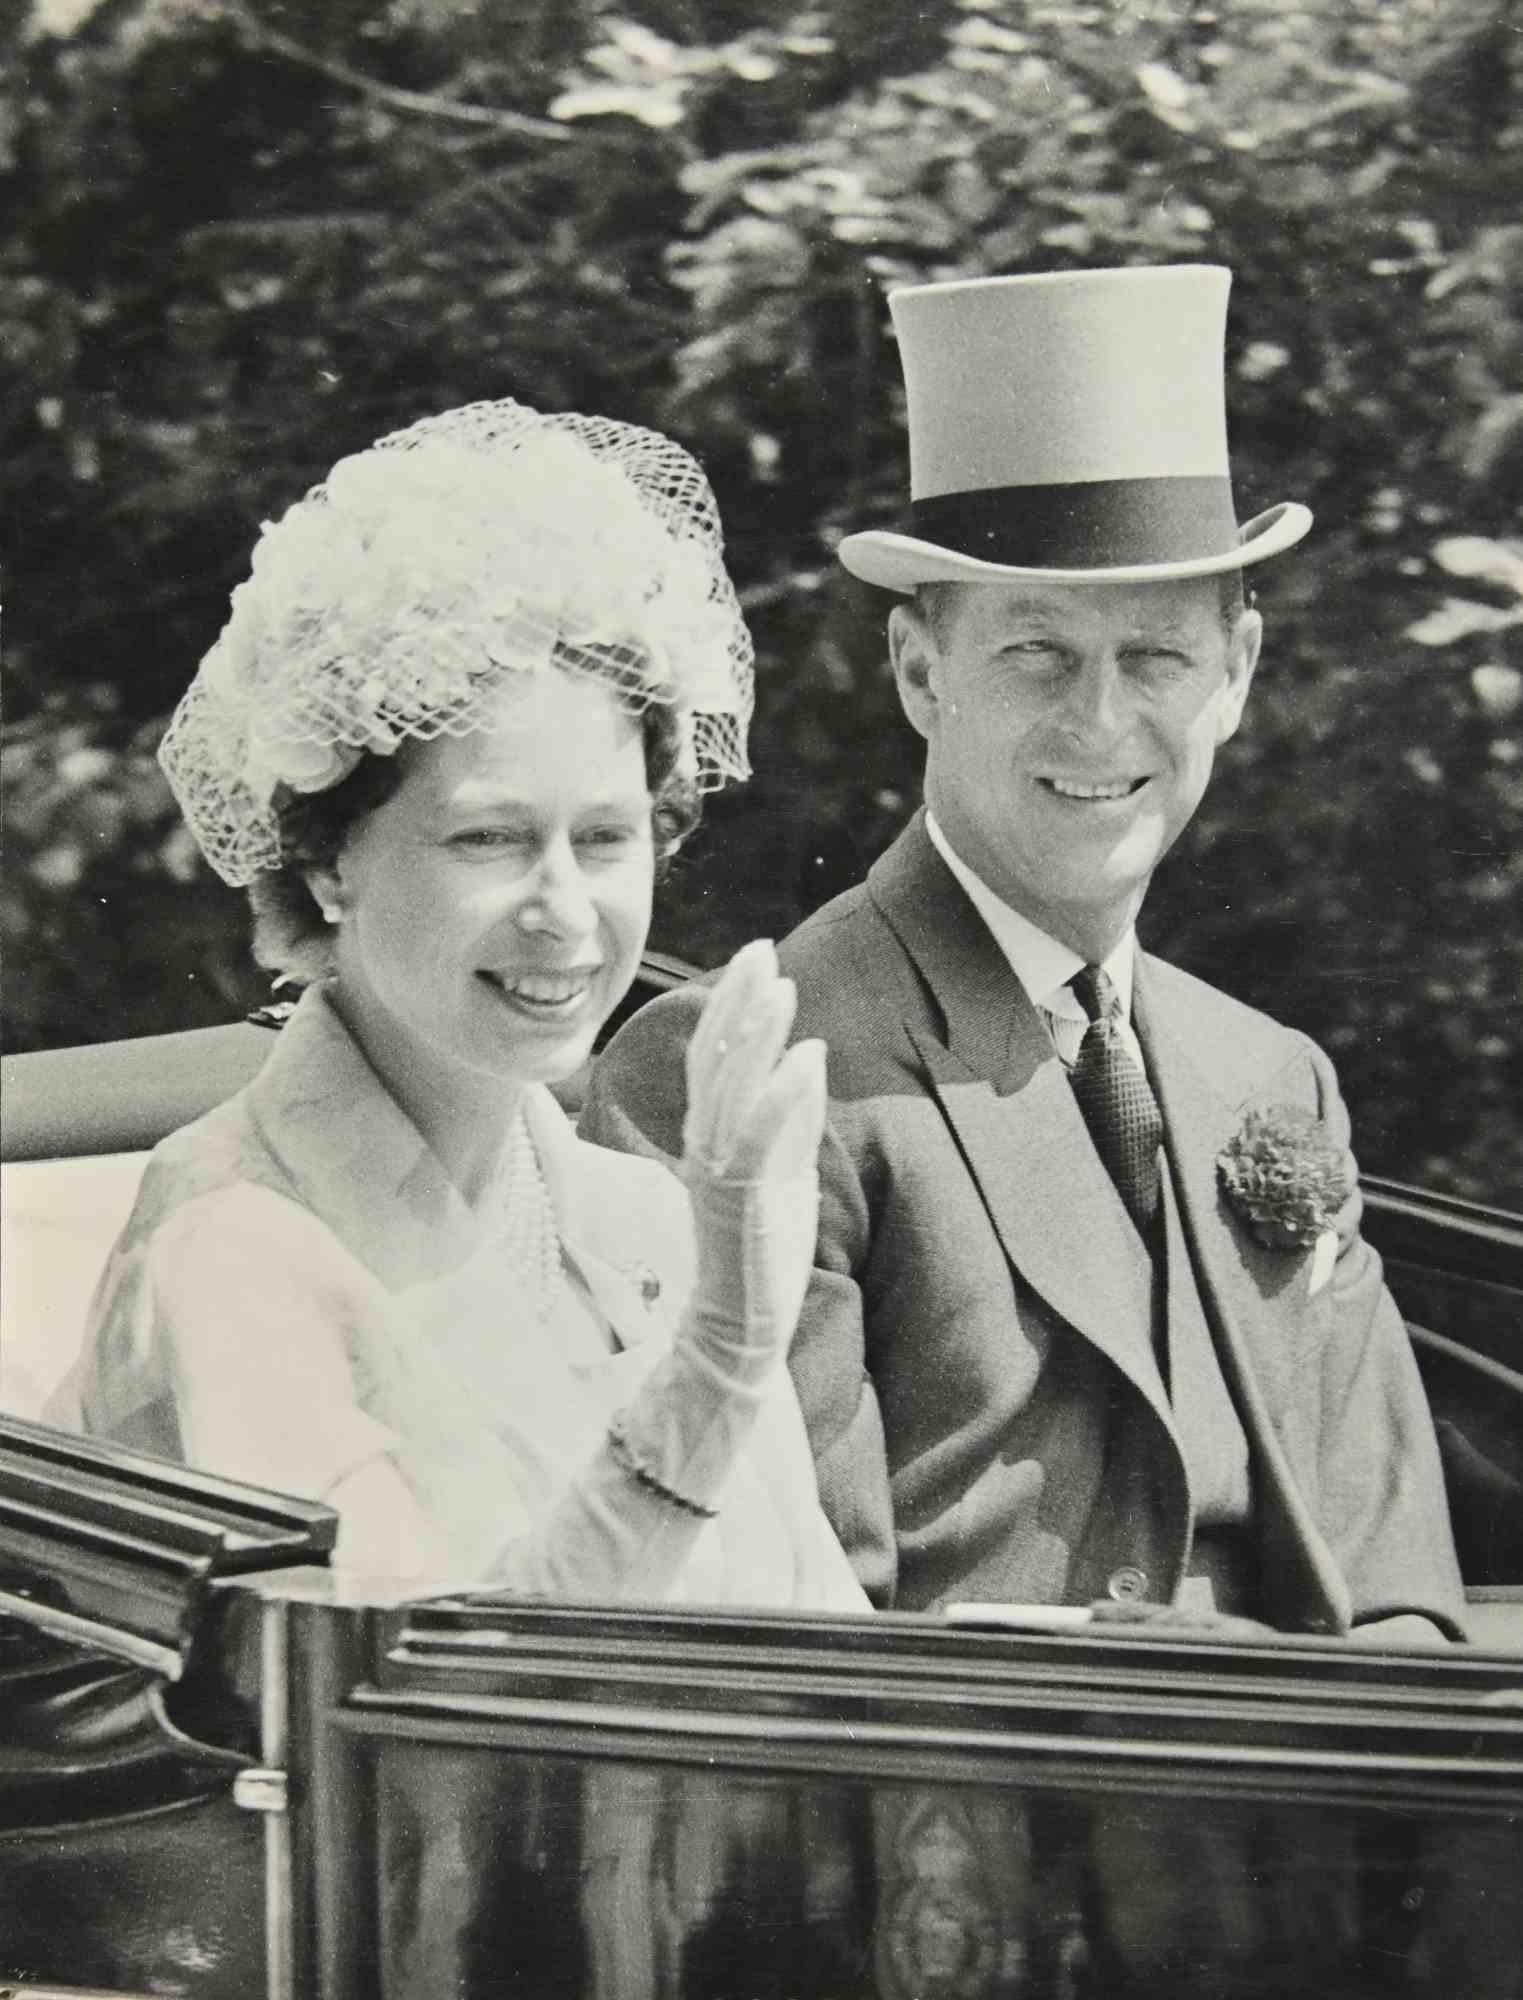 Unknown Portrait Photograph - Queen Elizabeth and Prince Philip - Photograph - 1960